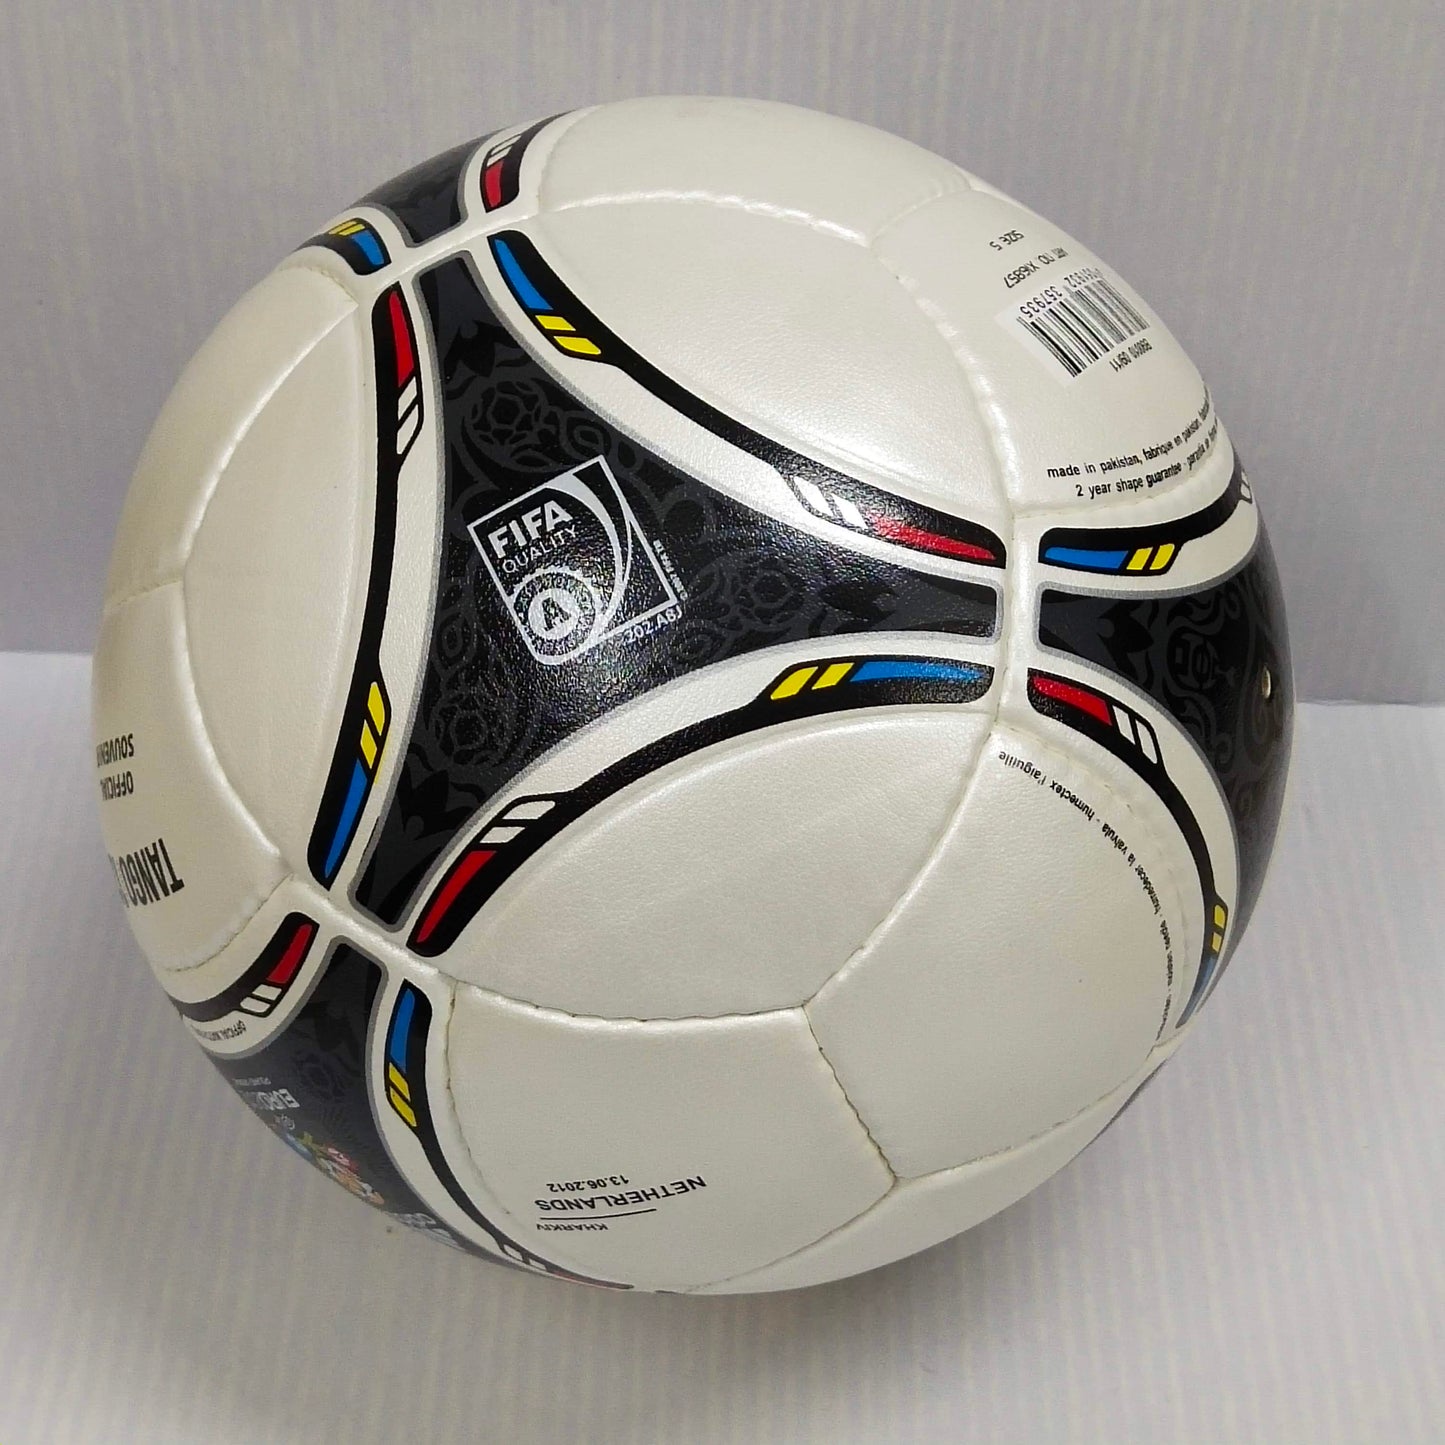 Adidas Tango 12 | 2012 | UEFA Europa League | Official Match Ball | Size 5 04